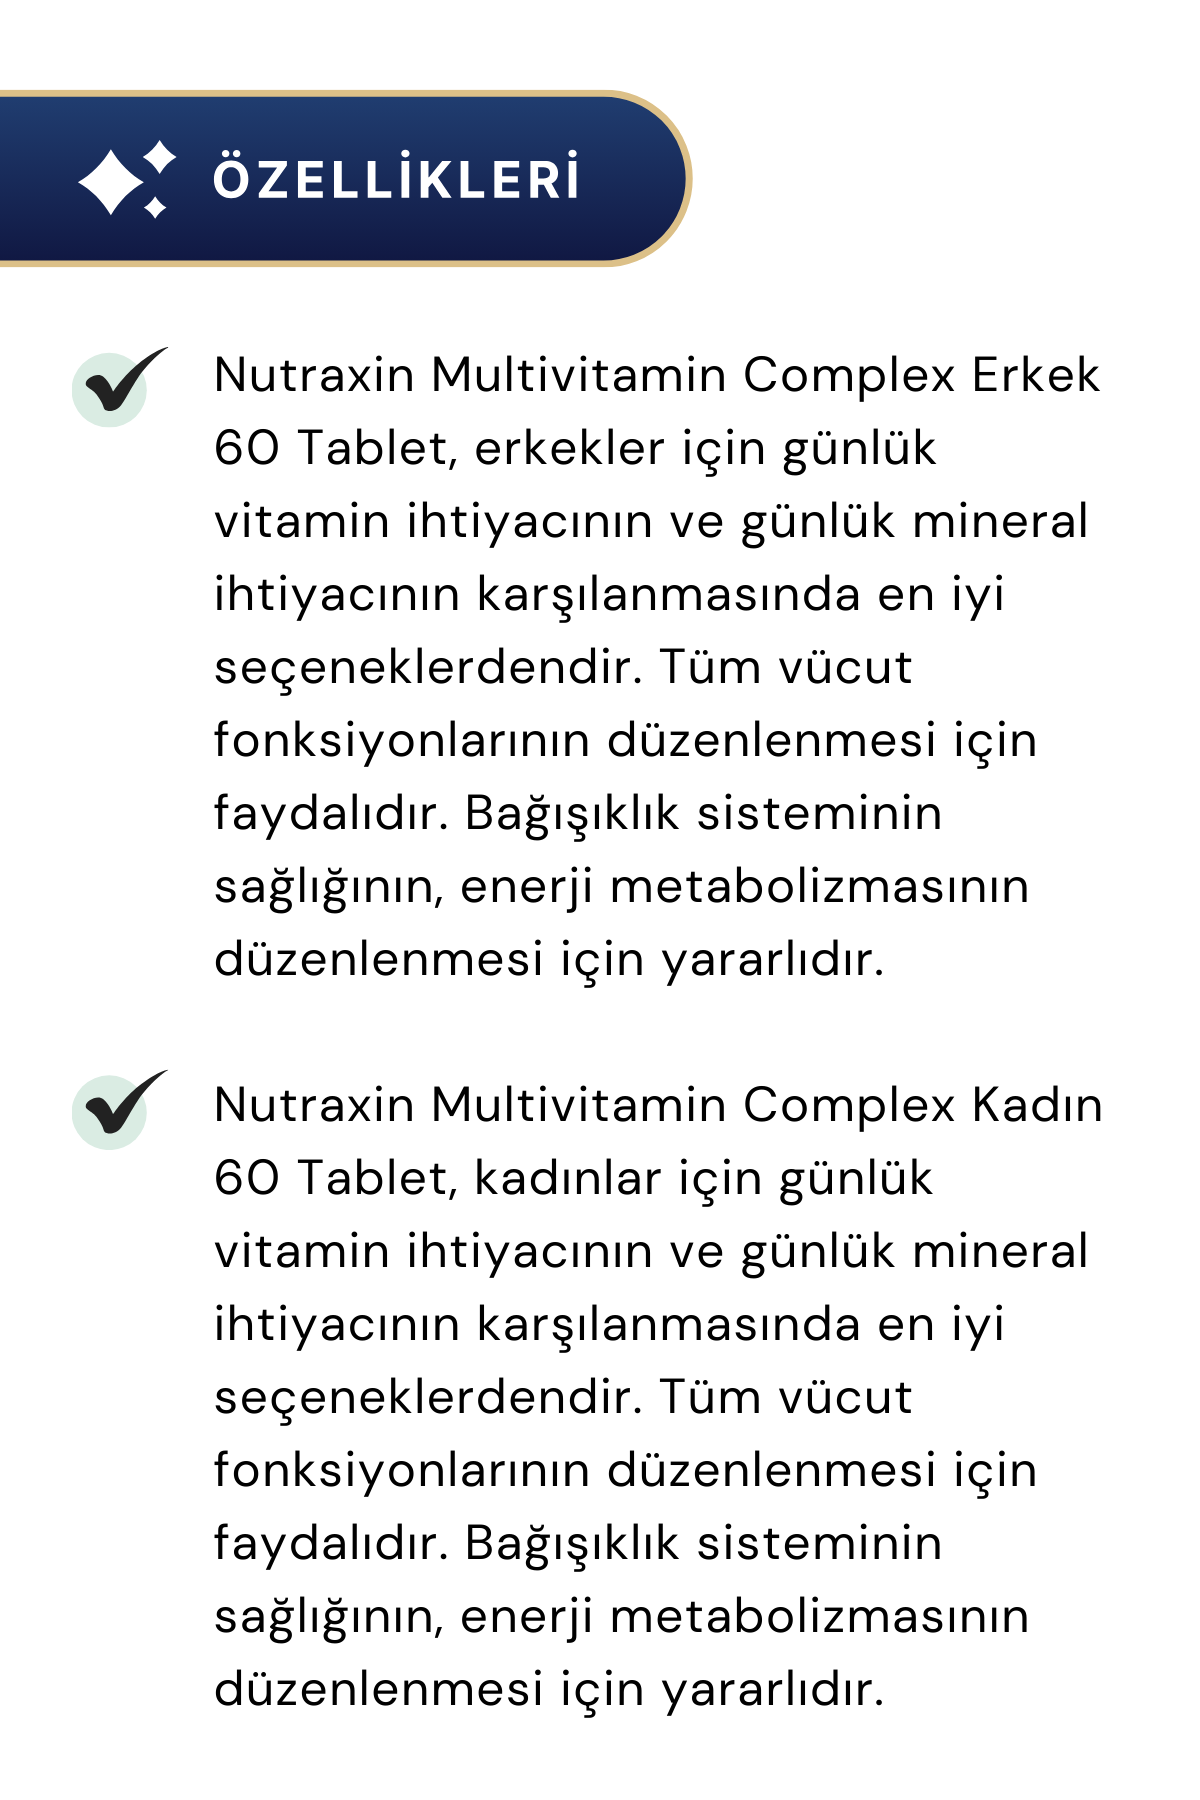 Nutraxin Men's Multivitamin Complex & Women's Multivitamin Complex